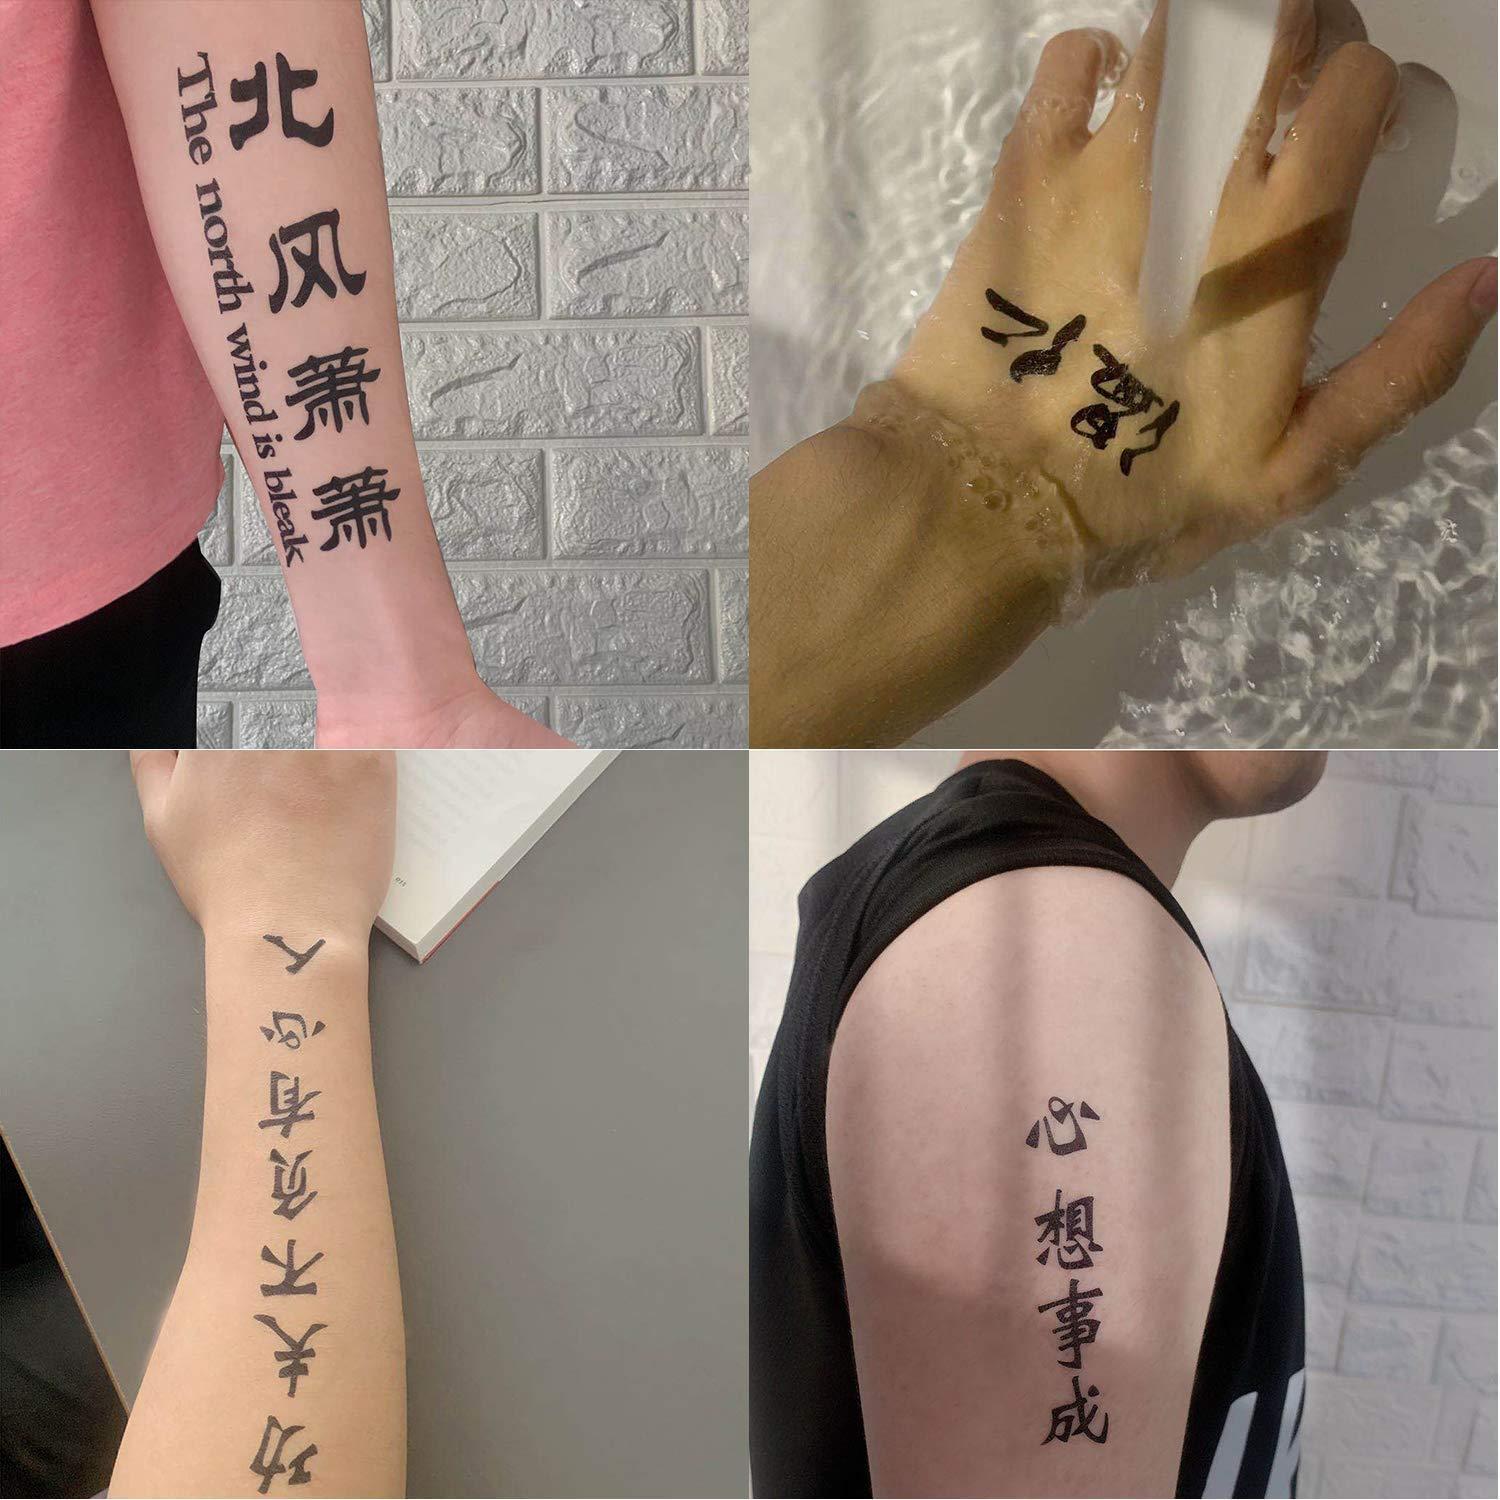 Kitsune Tattoo Meanings Explained - 10 Popular Designs